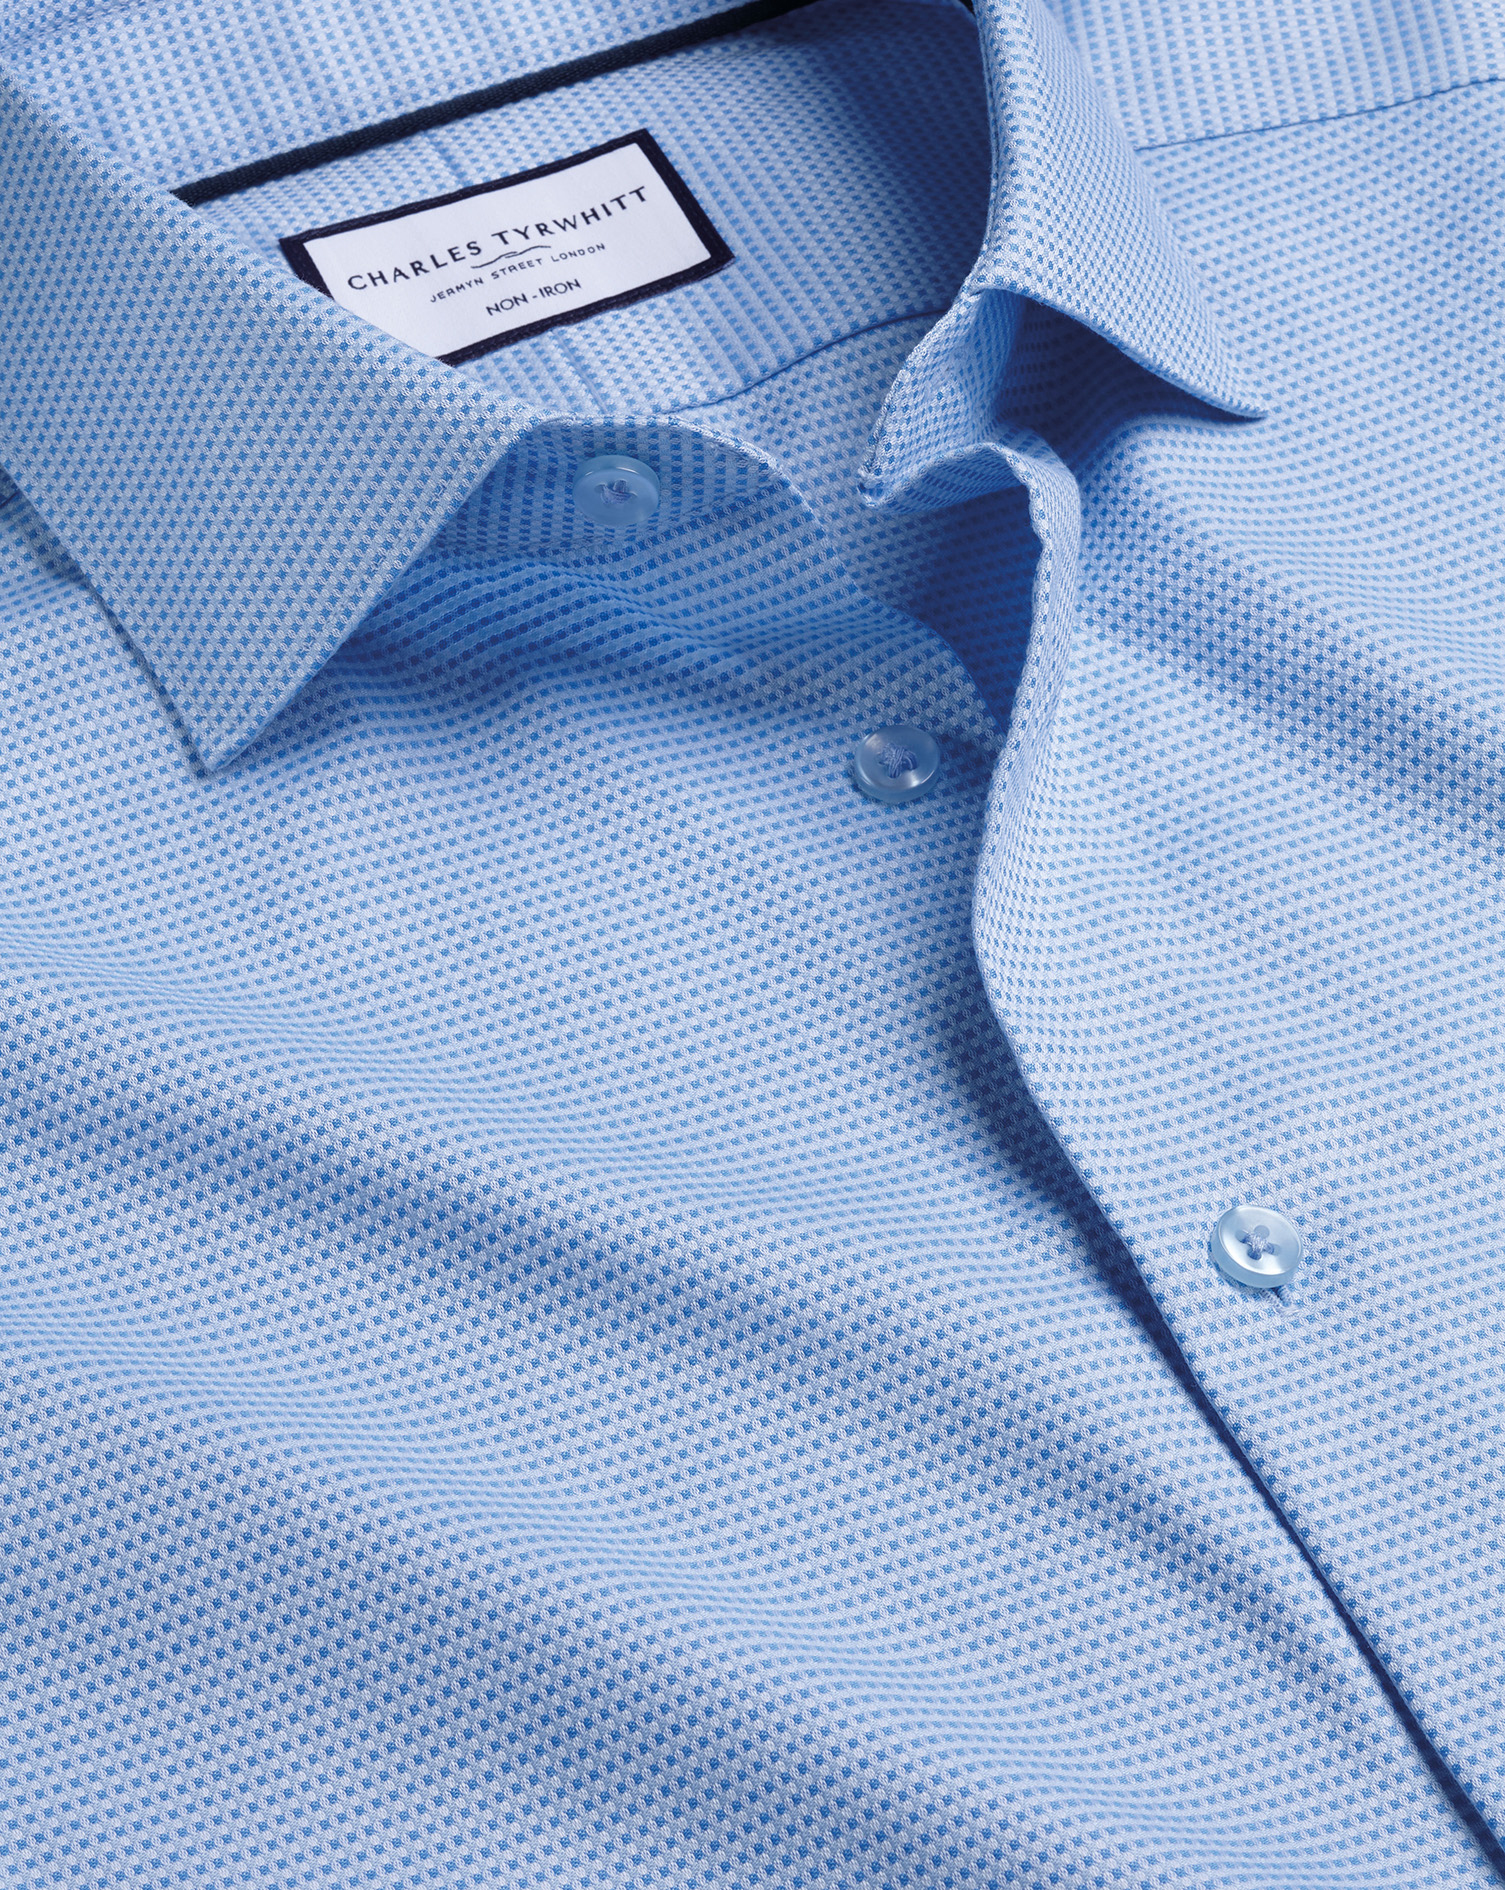 Men's Charles Tyrwhitt Non-Iron Stretch Texture Square Dress Shirt - Sky Blue Single Cuff Size XXXL 